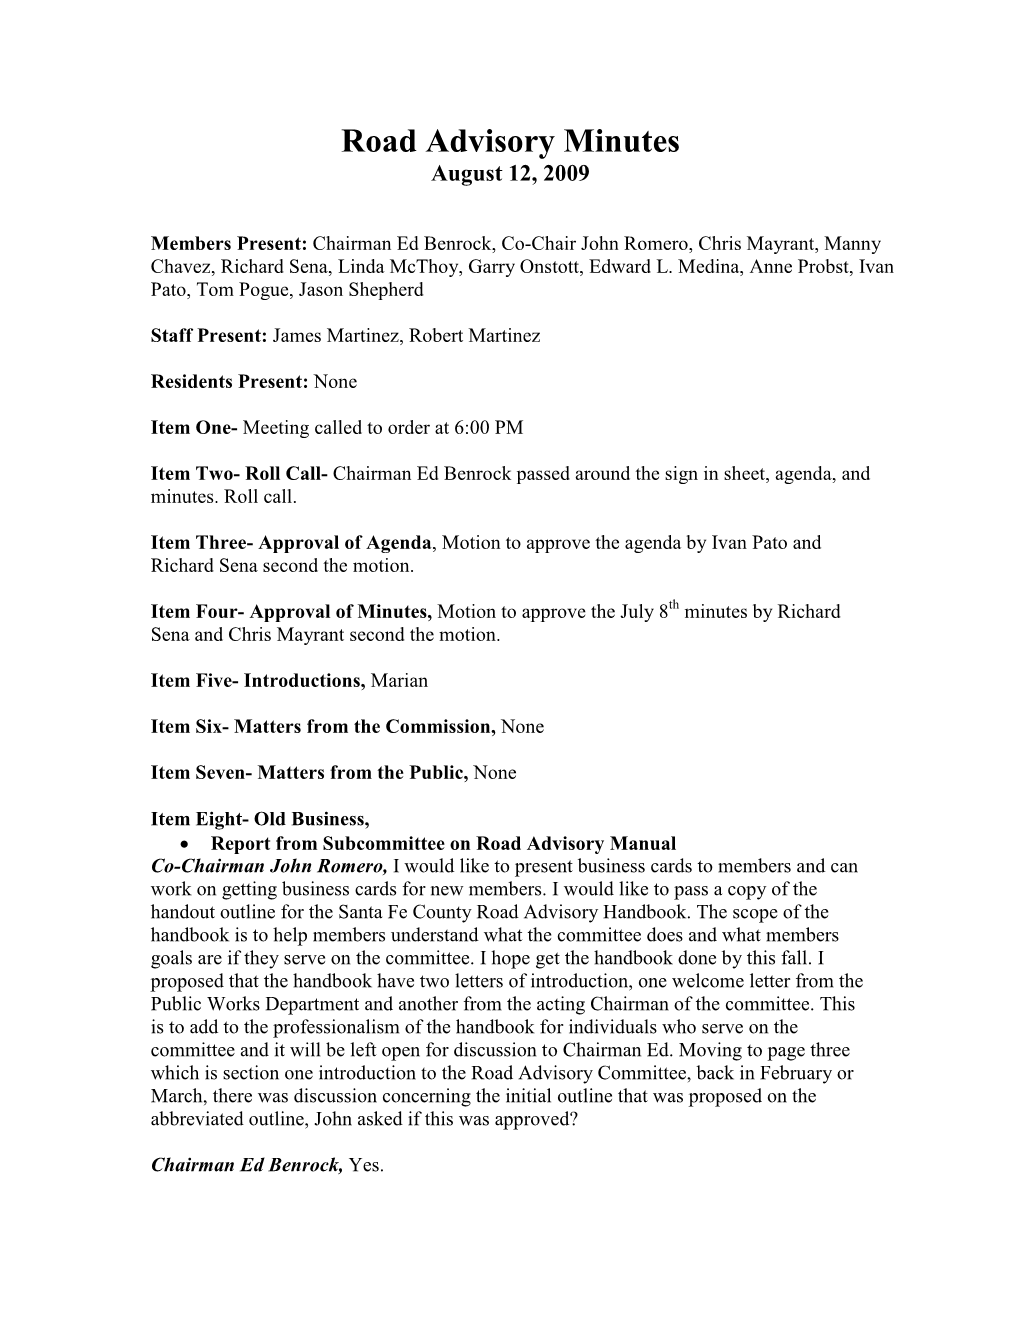 Road Advisory Minutes August 12, 2009